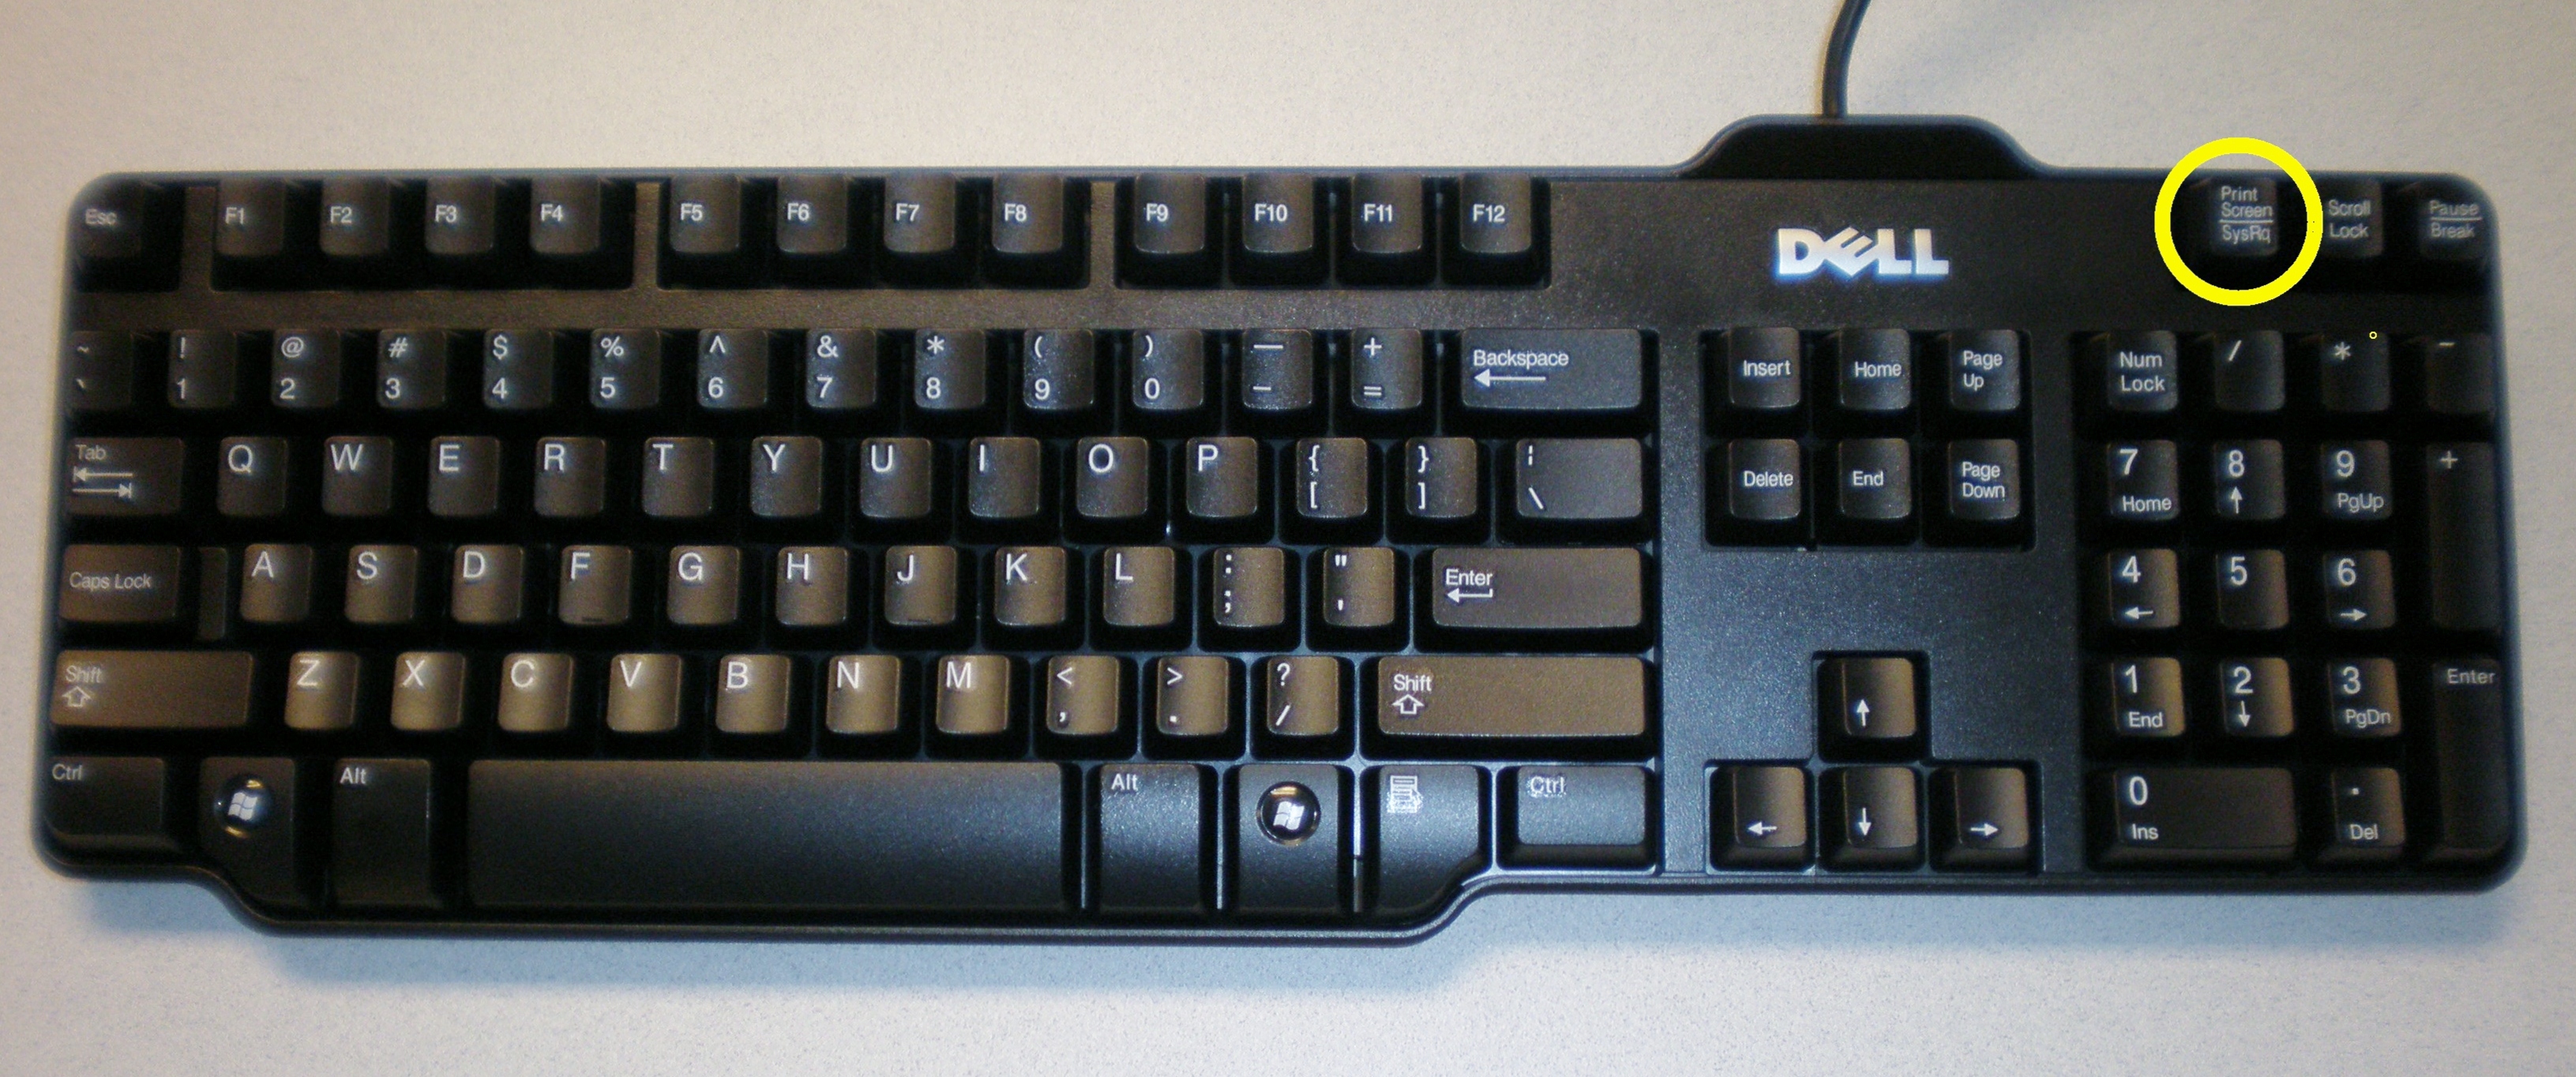 single button keyboard